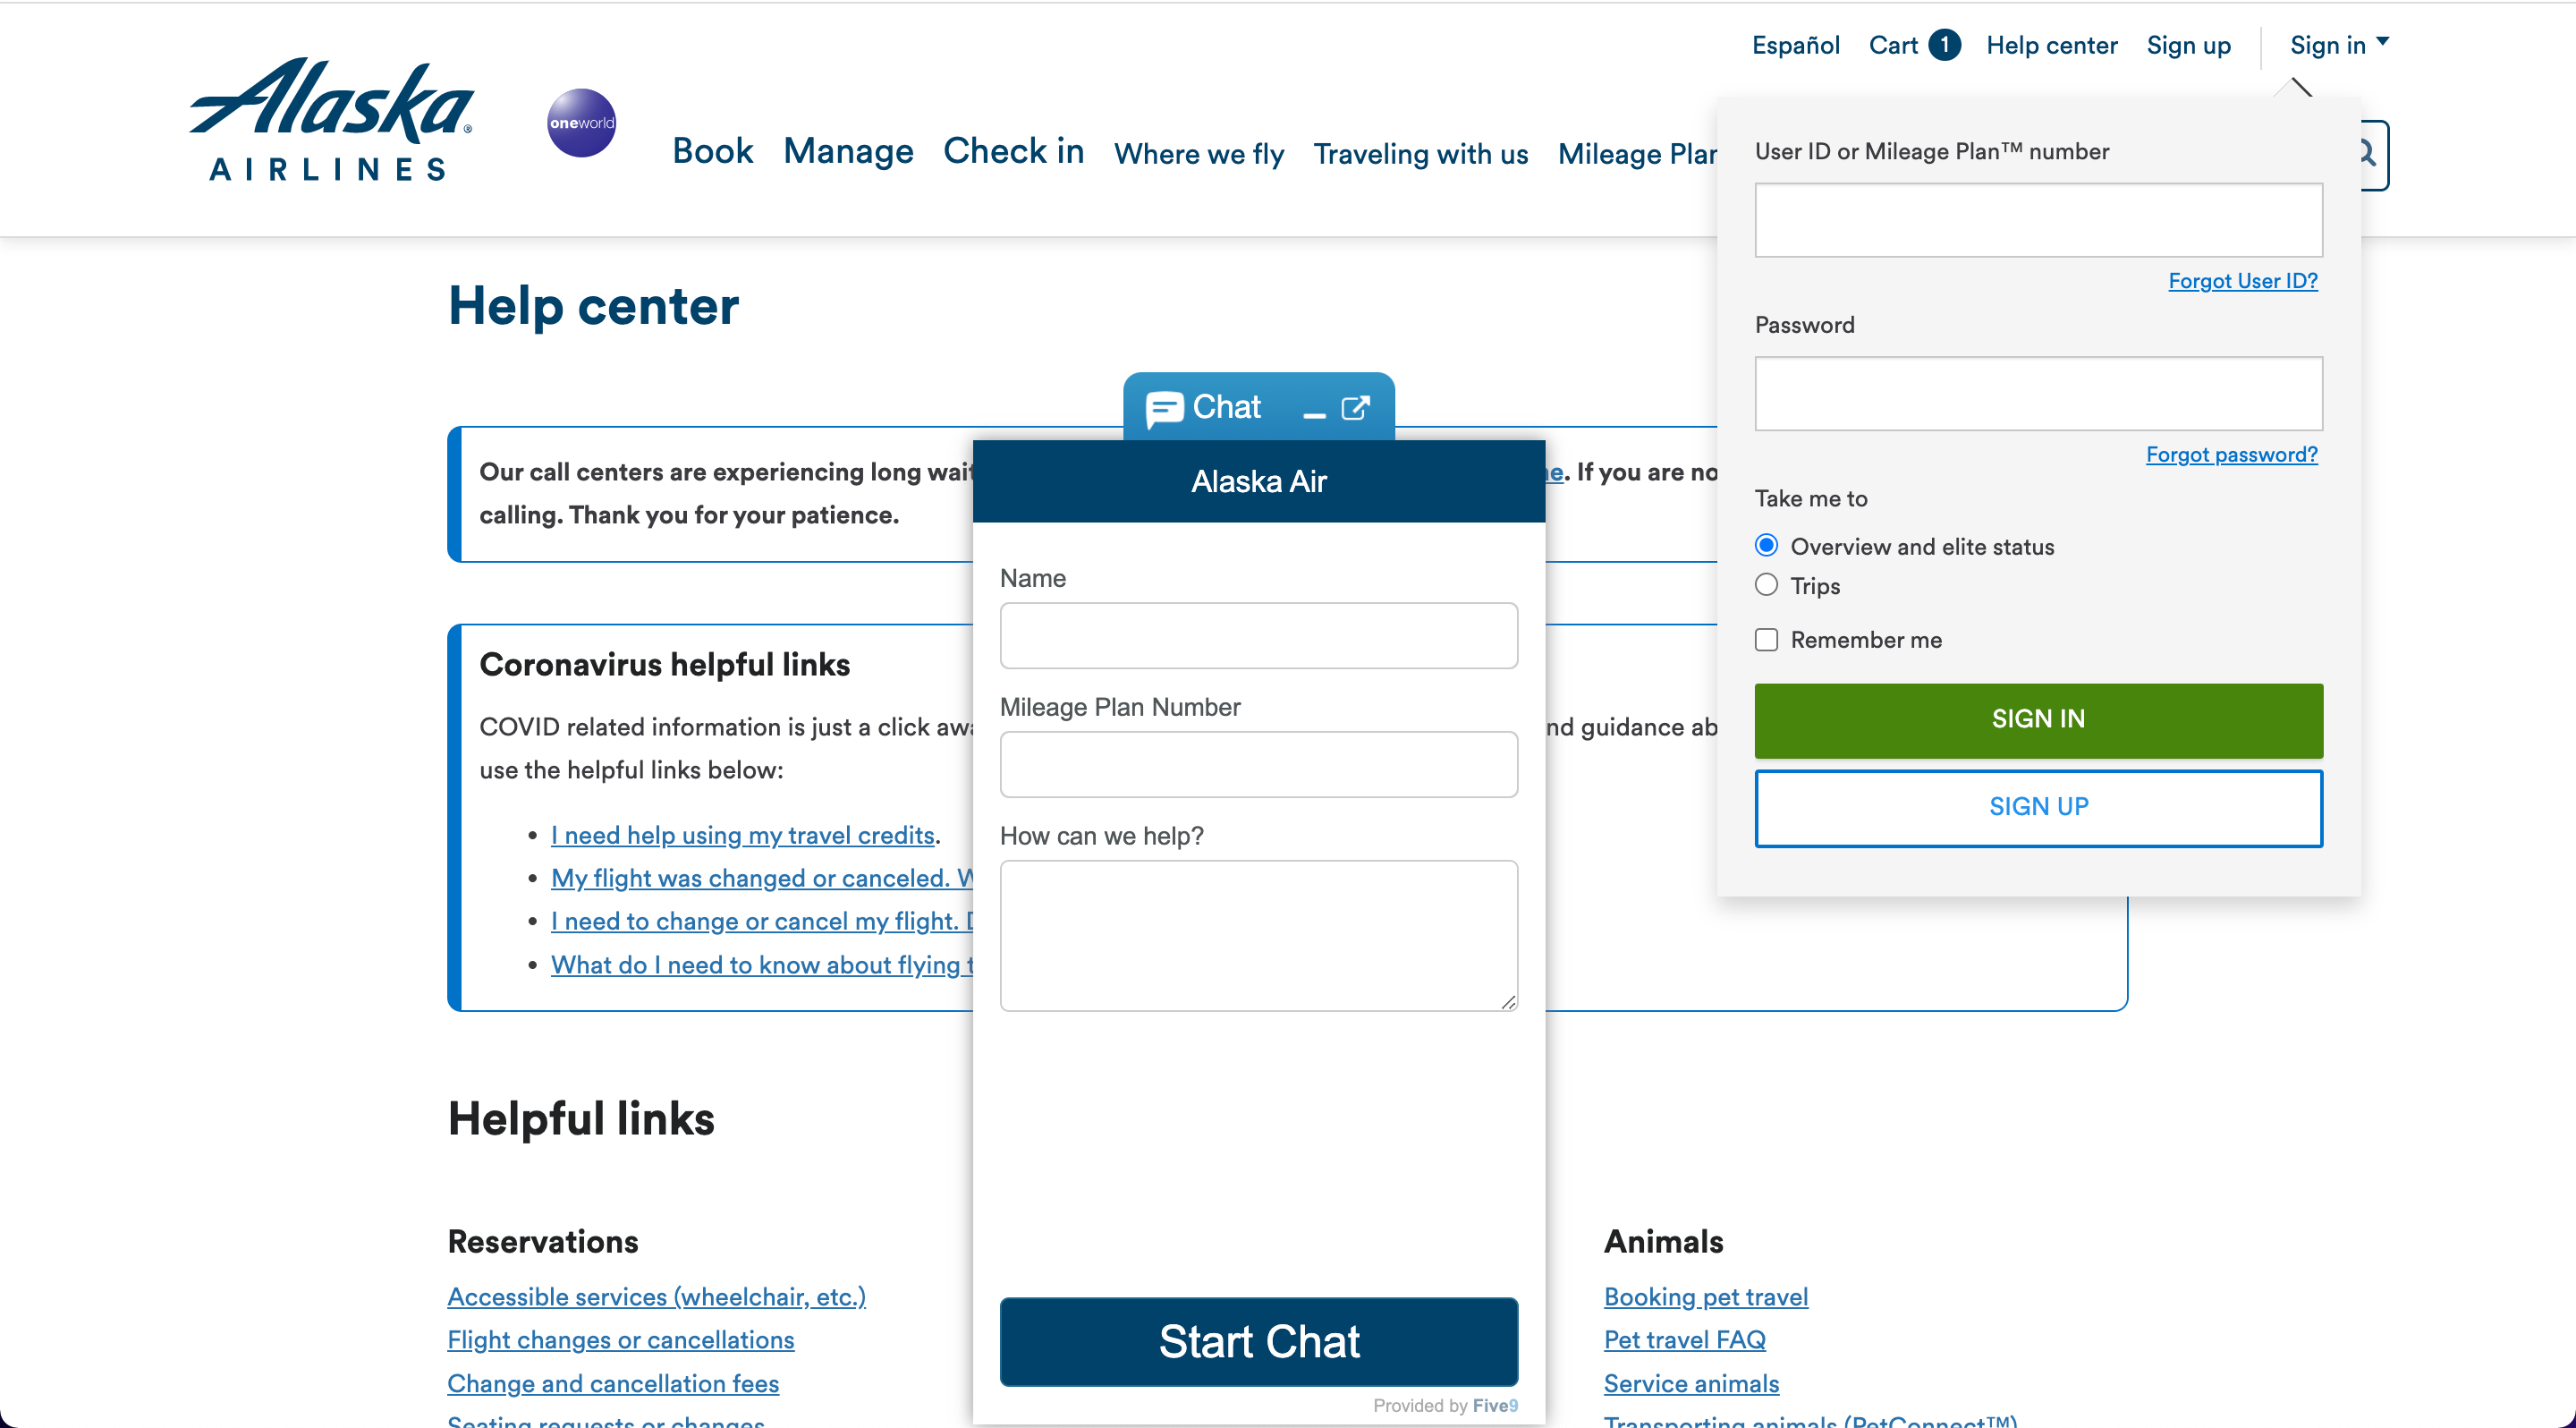 Alaska Airlines chat widget vs sign-in form